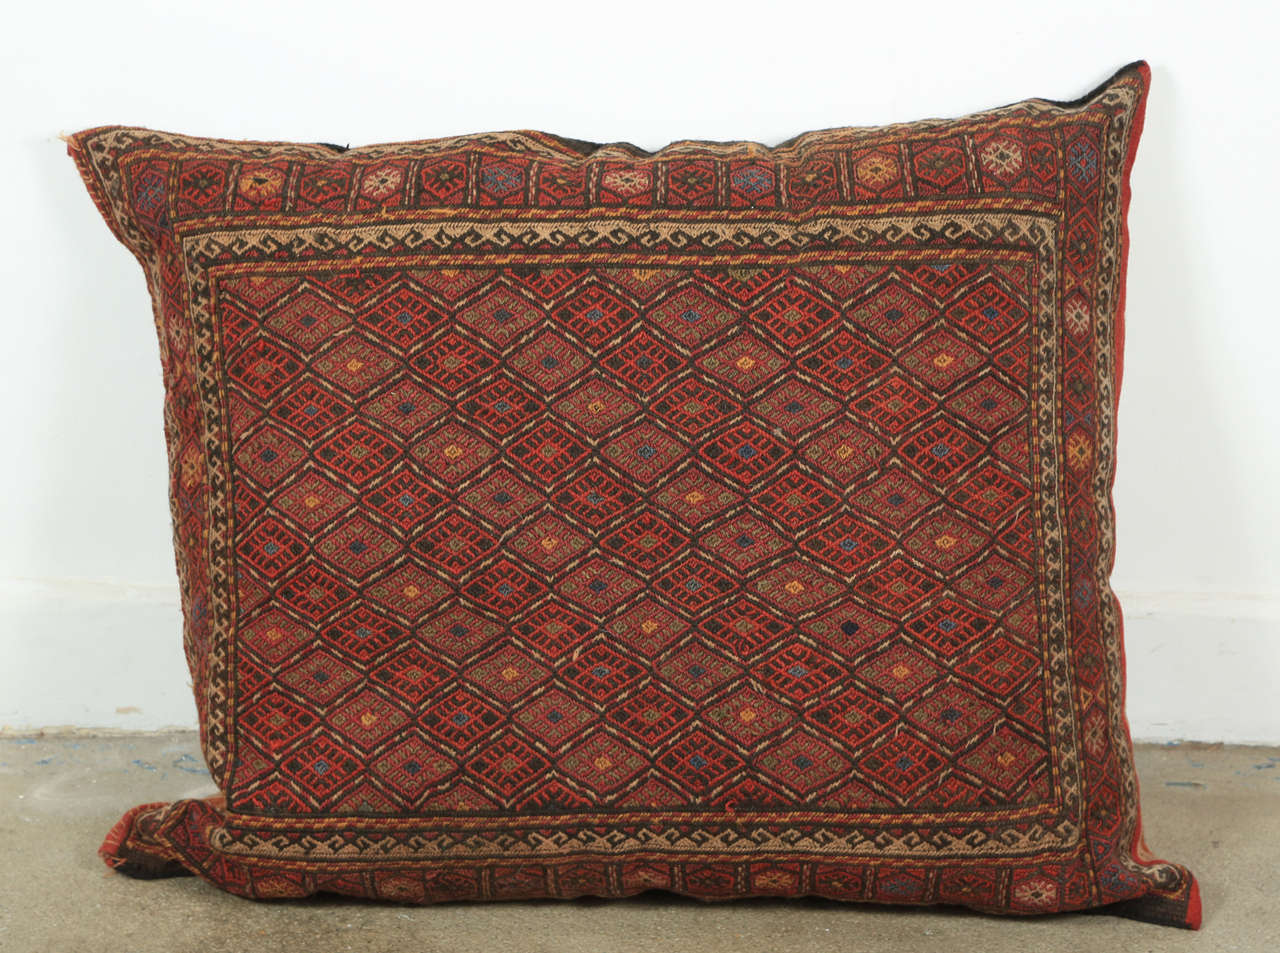 Middle Eastern Turkish large tribal Kilim floor pillow.
Handmade from an old Kilim Turkish rug.